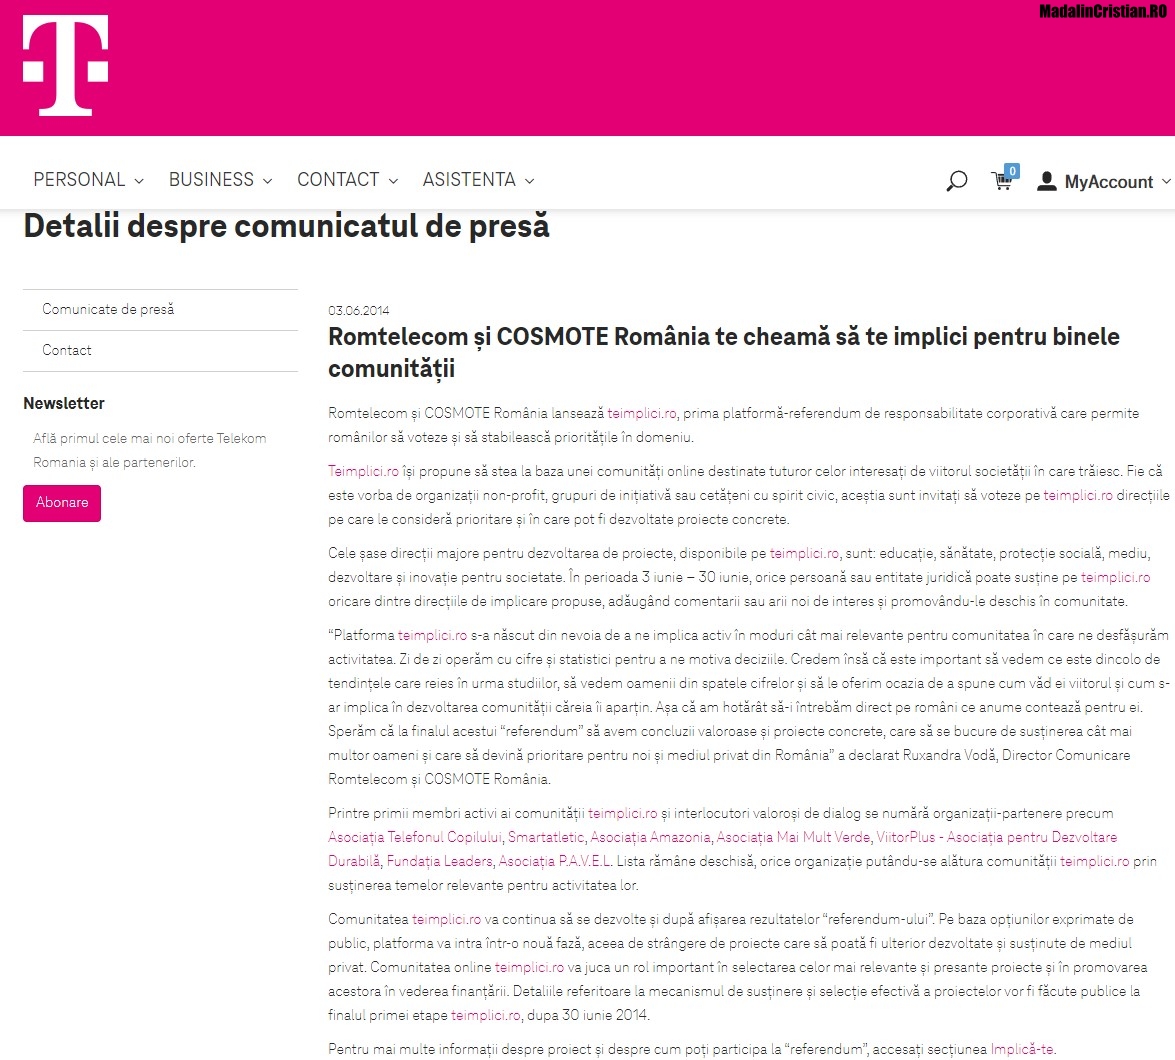 Comunicat COSMOTE Romtelecom 03.06.2014